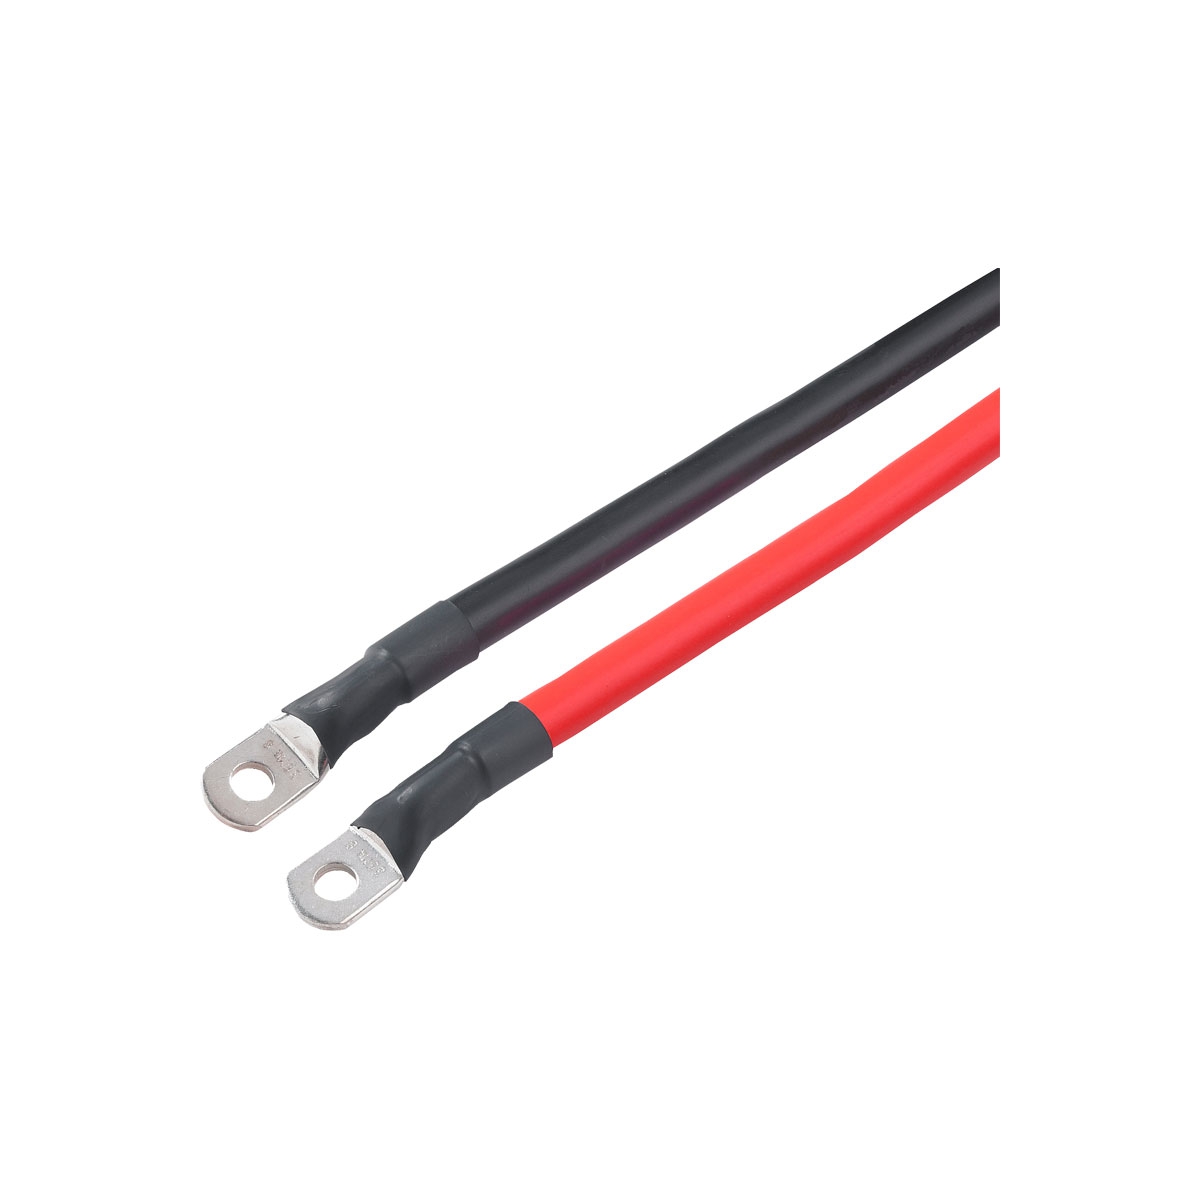 VOTRONIC Hochstrom-Kabelsatz rot-schwarz 25mm 2m - 2269